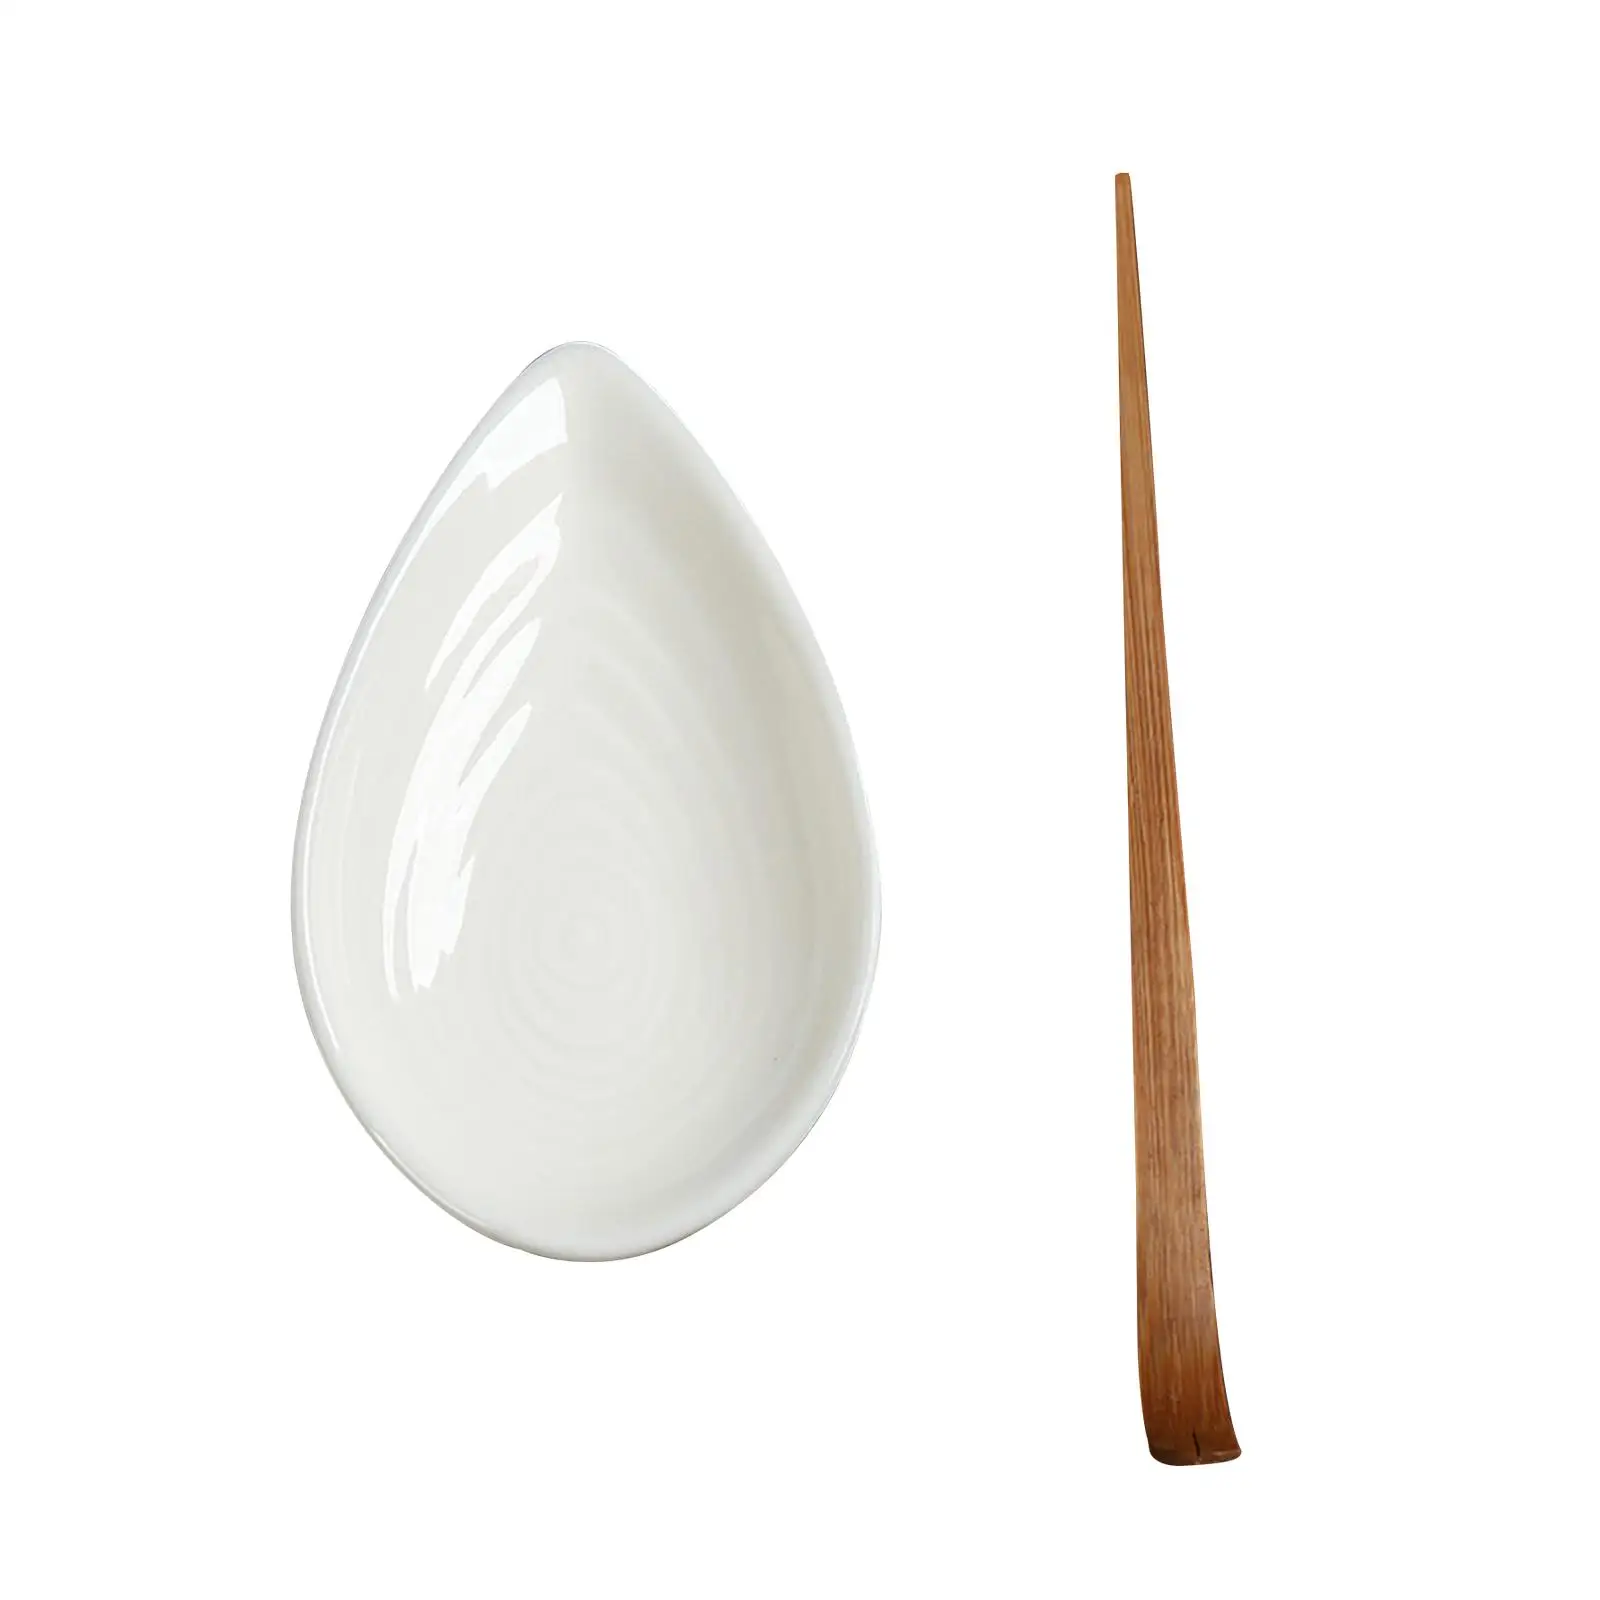 Ceramic Teaspoons Traditional Tea Art Shovel Filter for Indoor Kitchen Tea Room